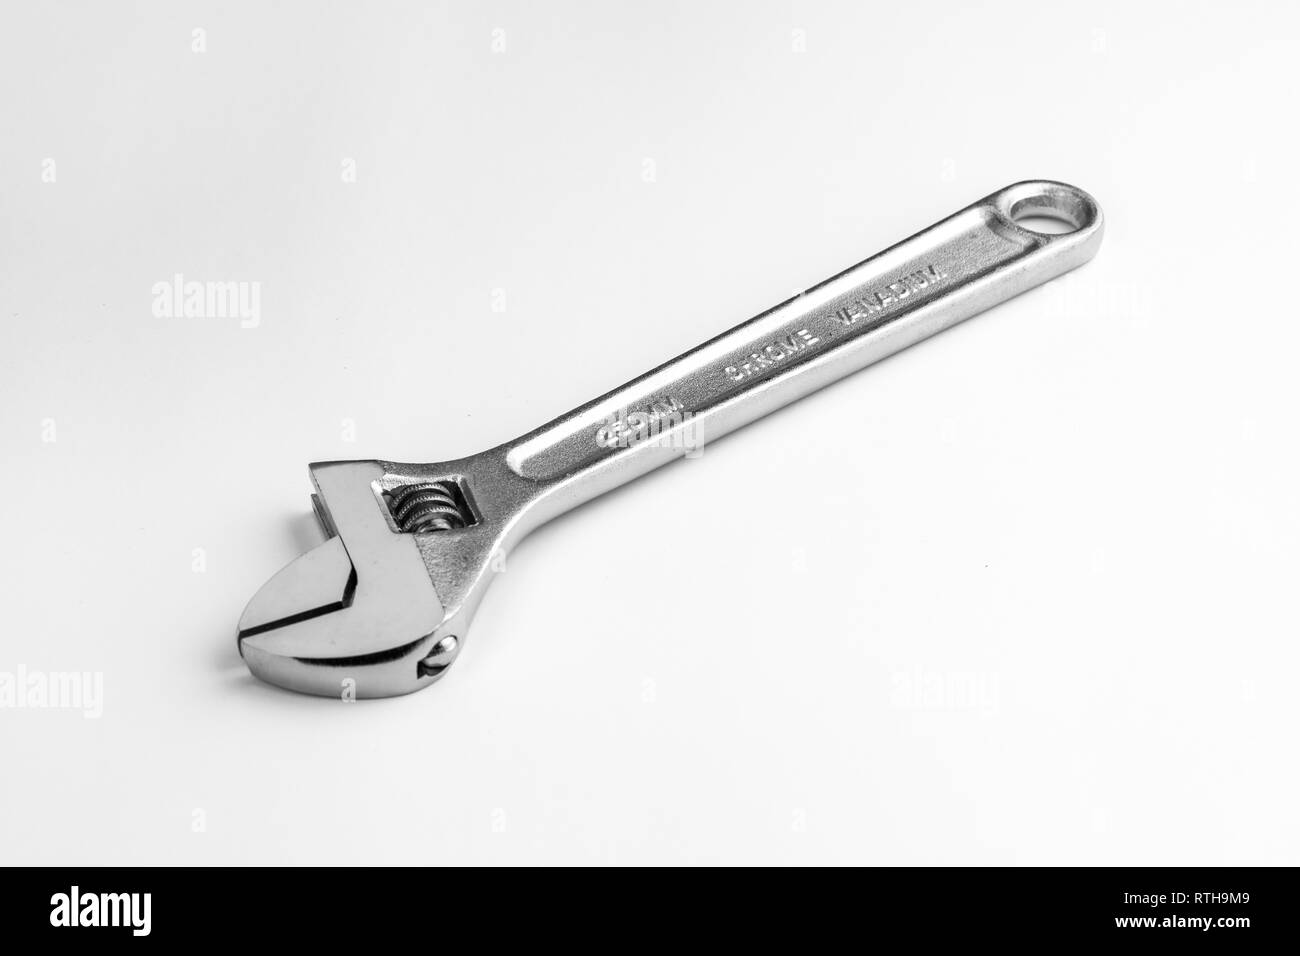 Adjustable Wrench Isolated on White Background Stock Photo